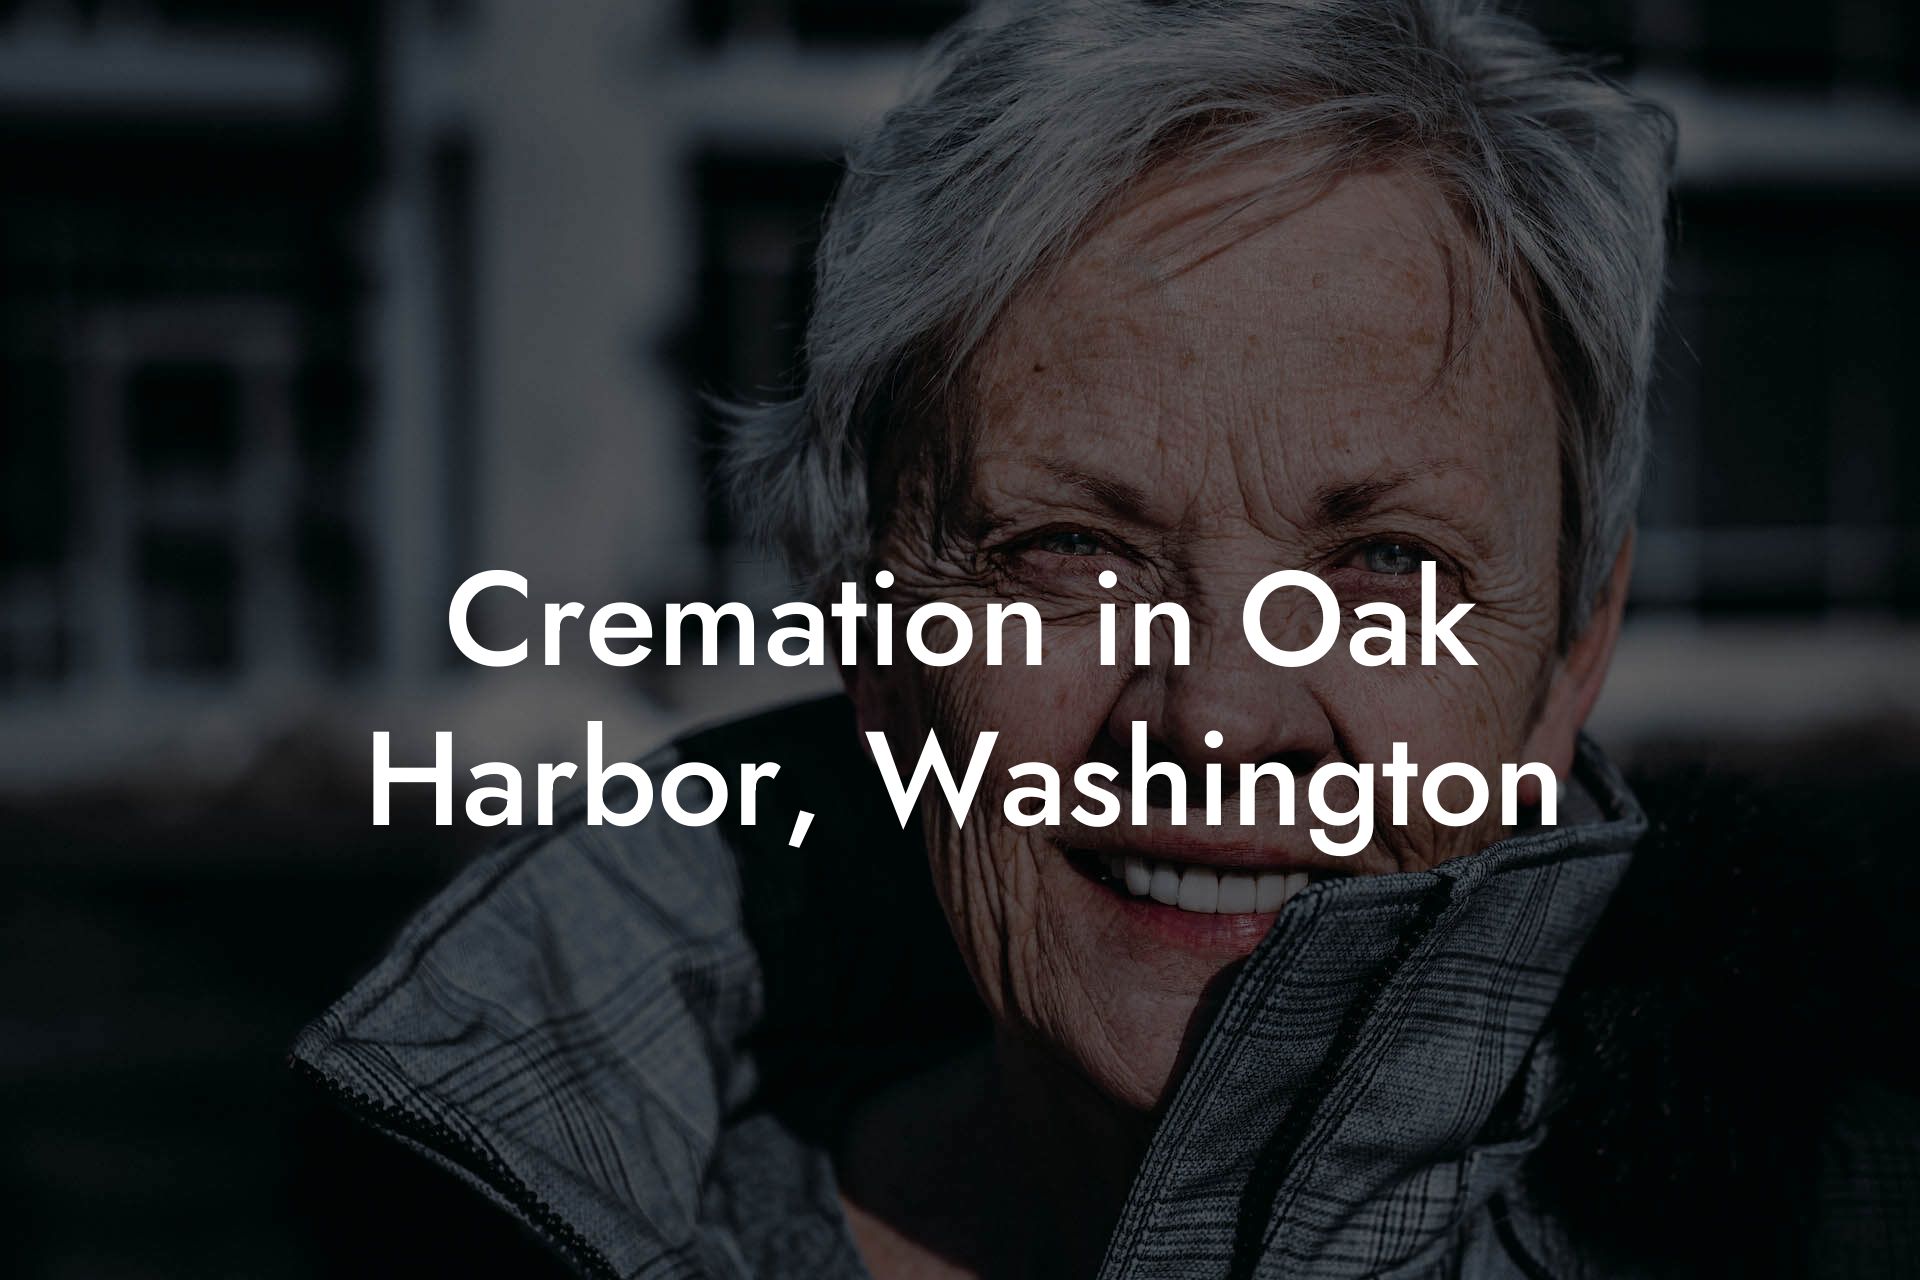 Cremation in Oak Harbor, Washington